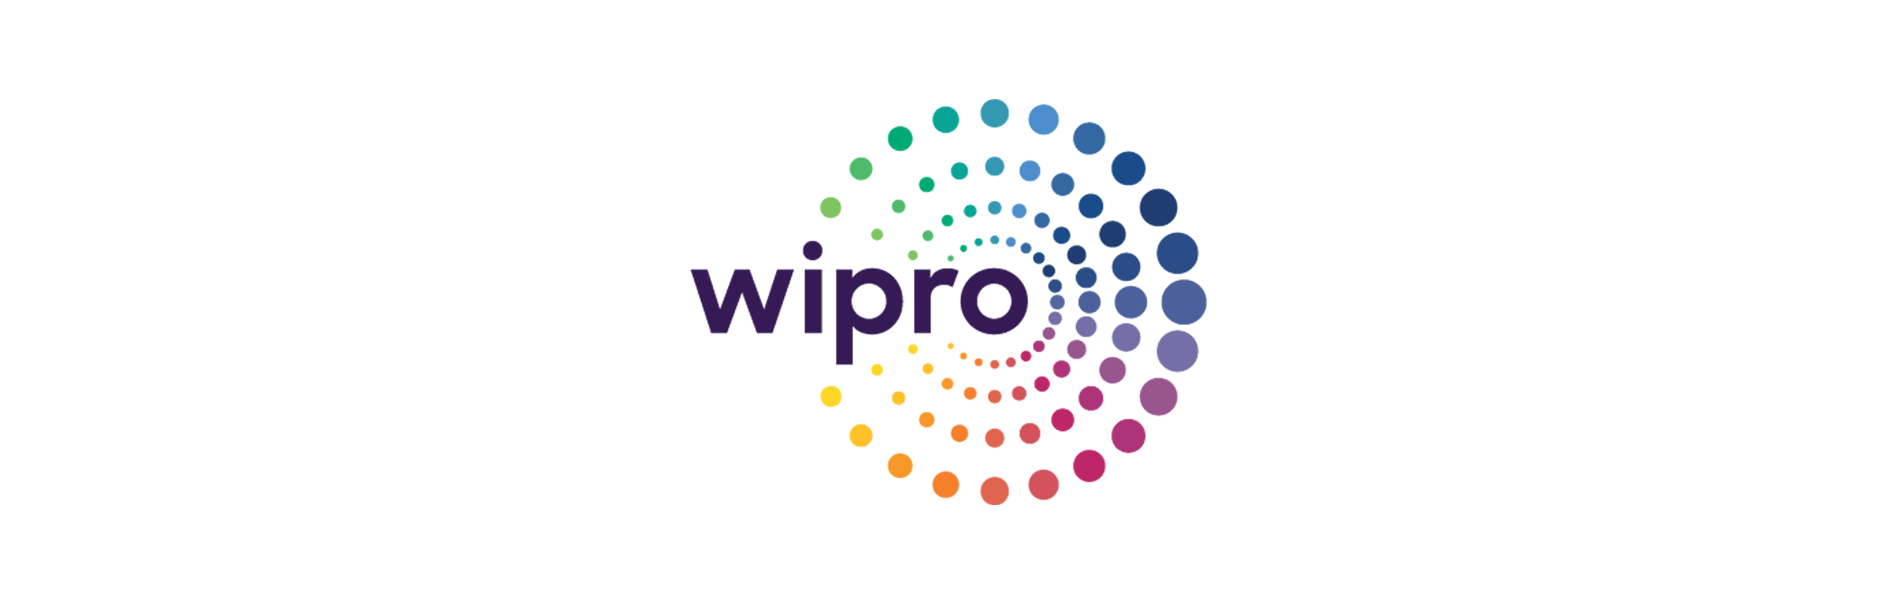 Wipro Awarded Boomi Worldwide Spotlight Award 2021